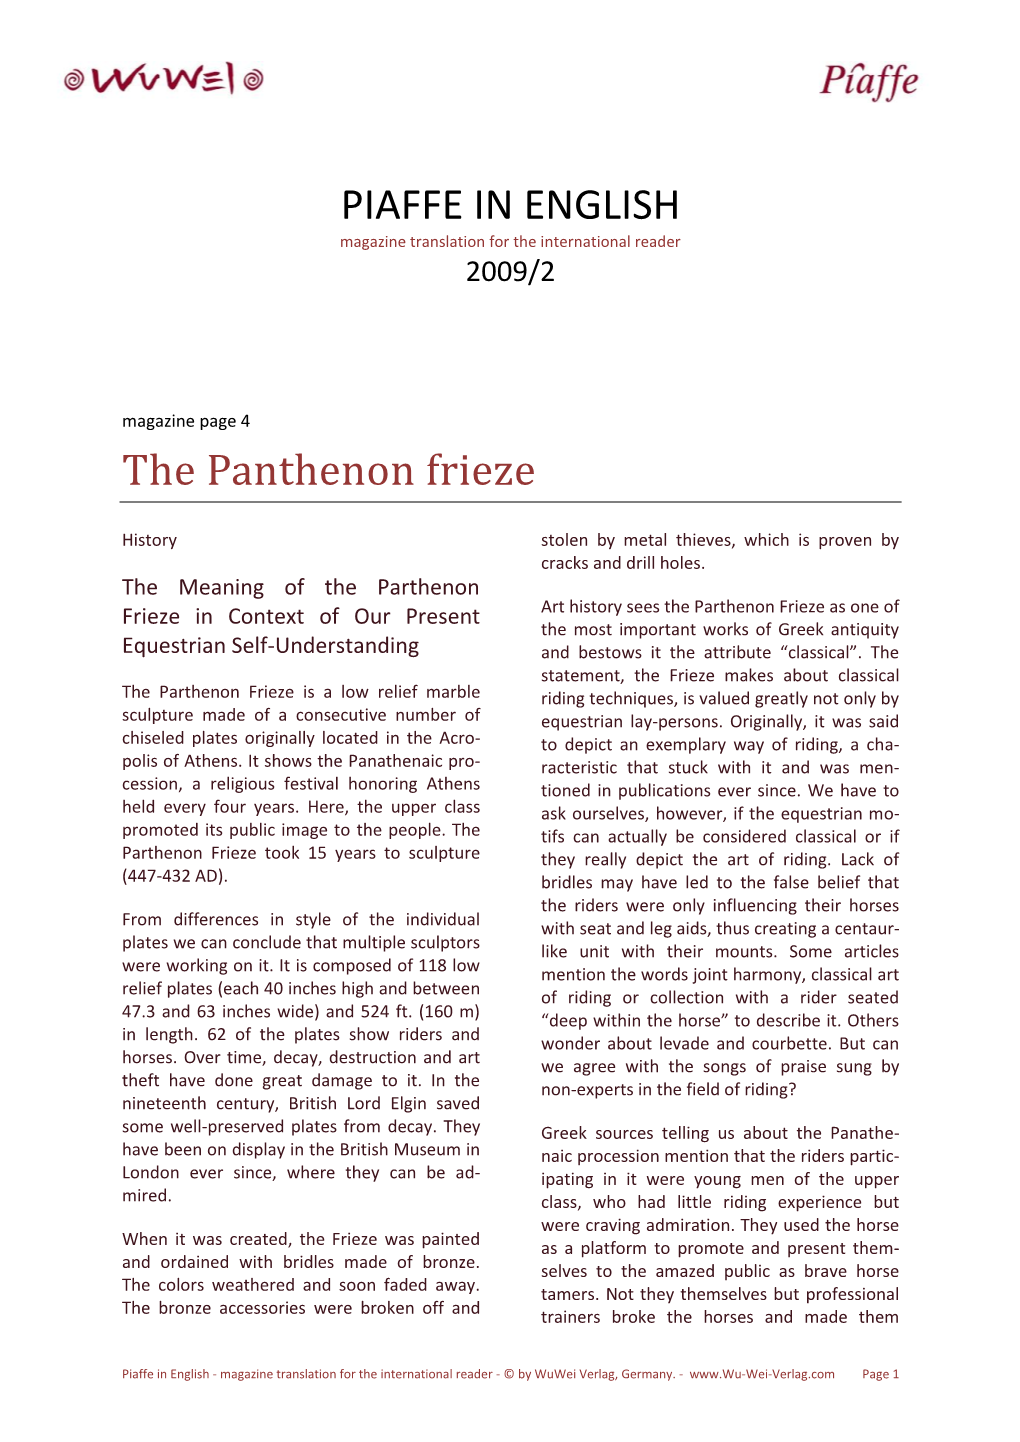 PIAFFE in ENGLISH the Panthenon Frieze